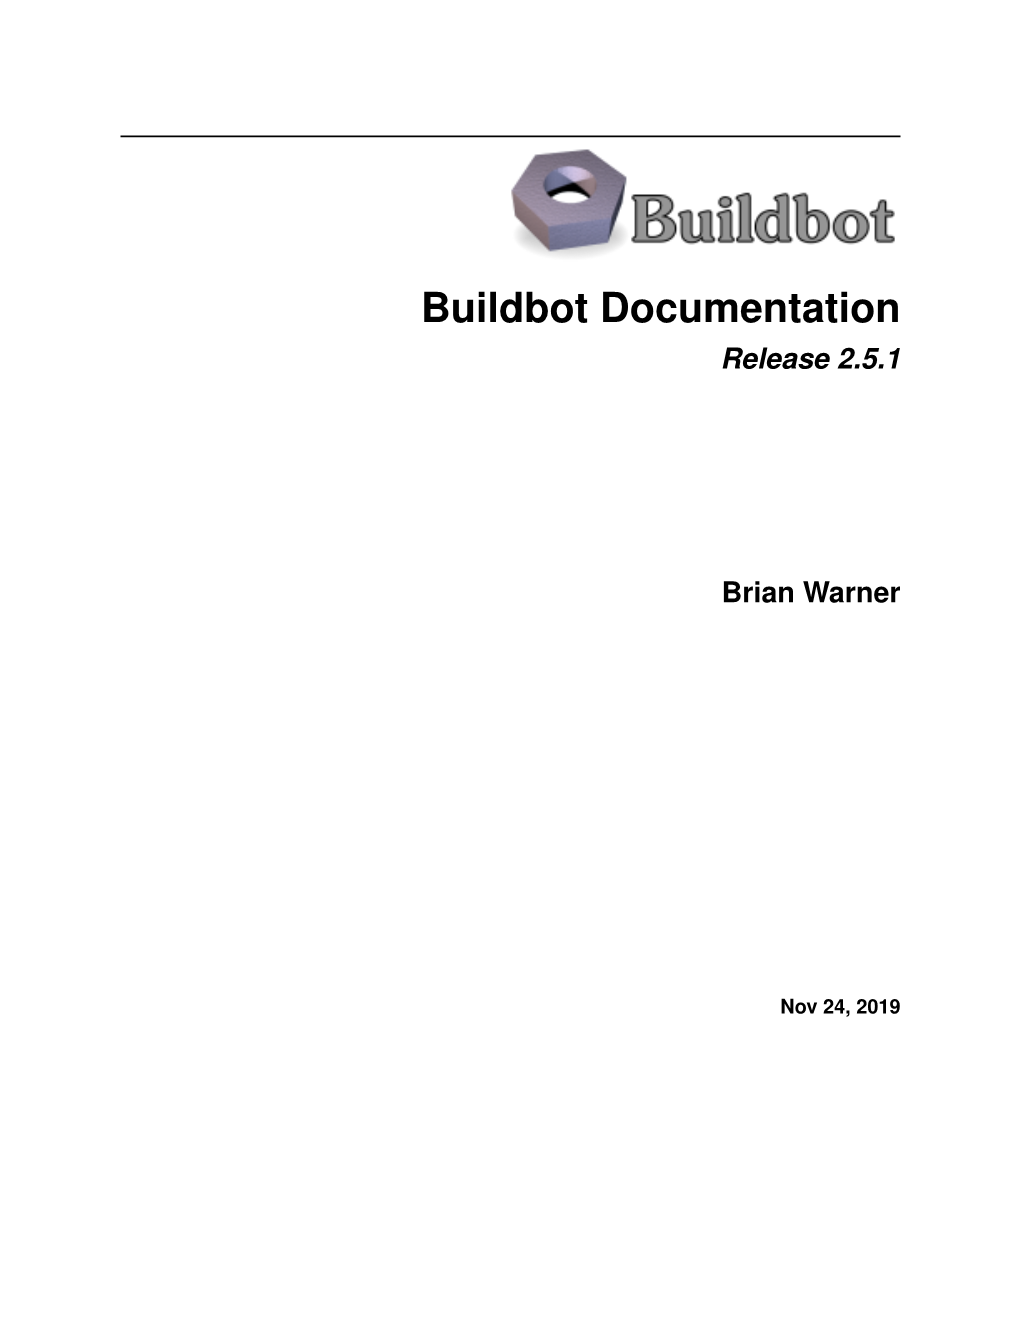 Buildbot Documentation Release 2.5.1